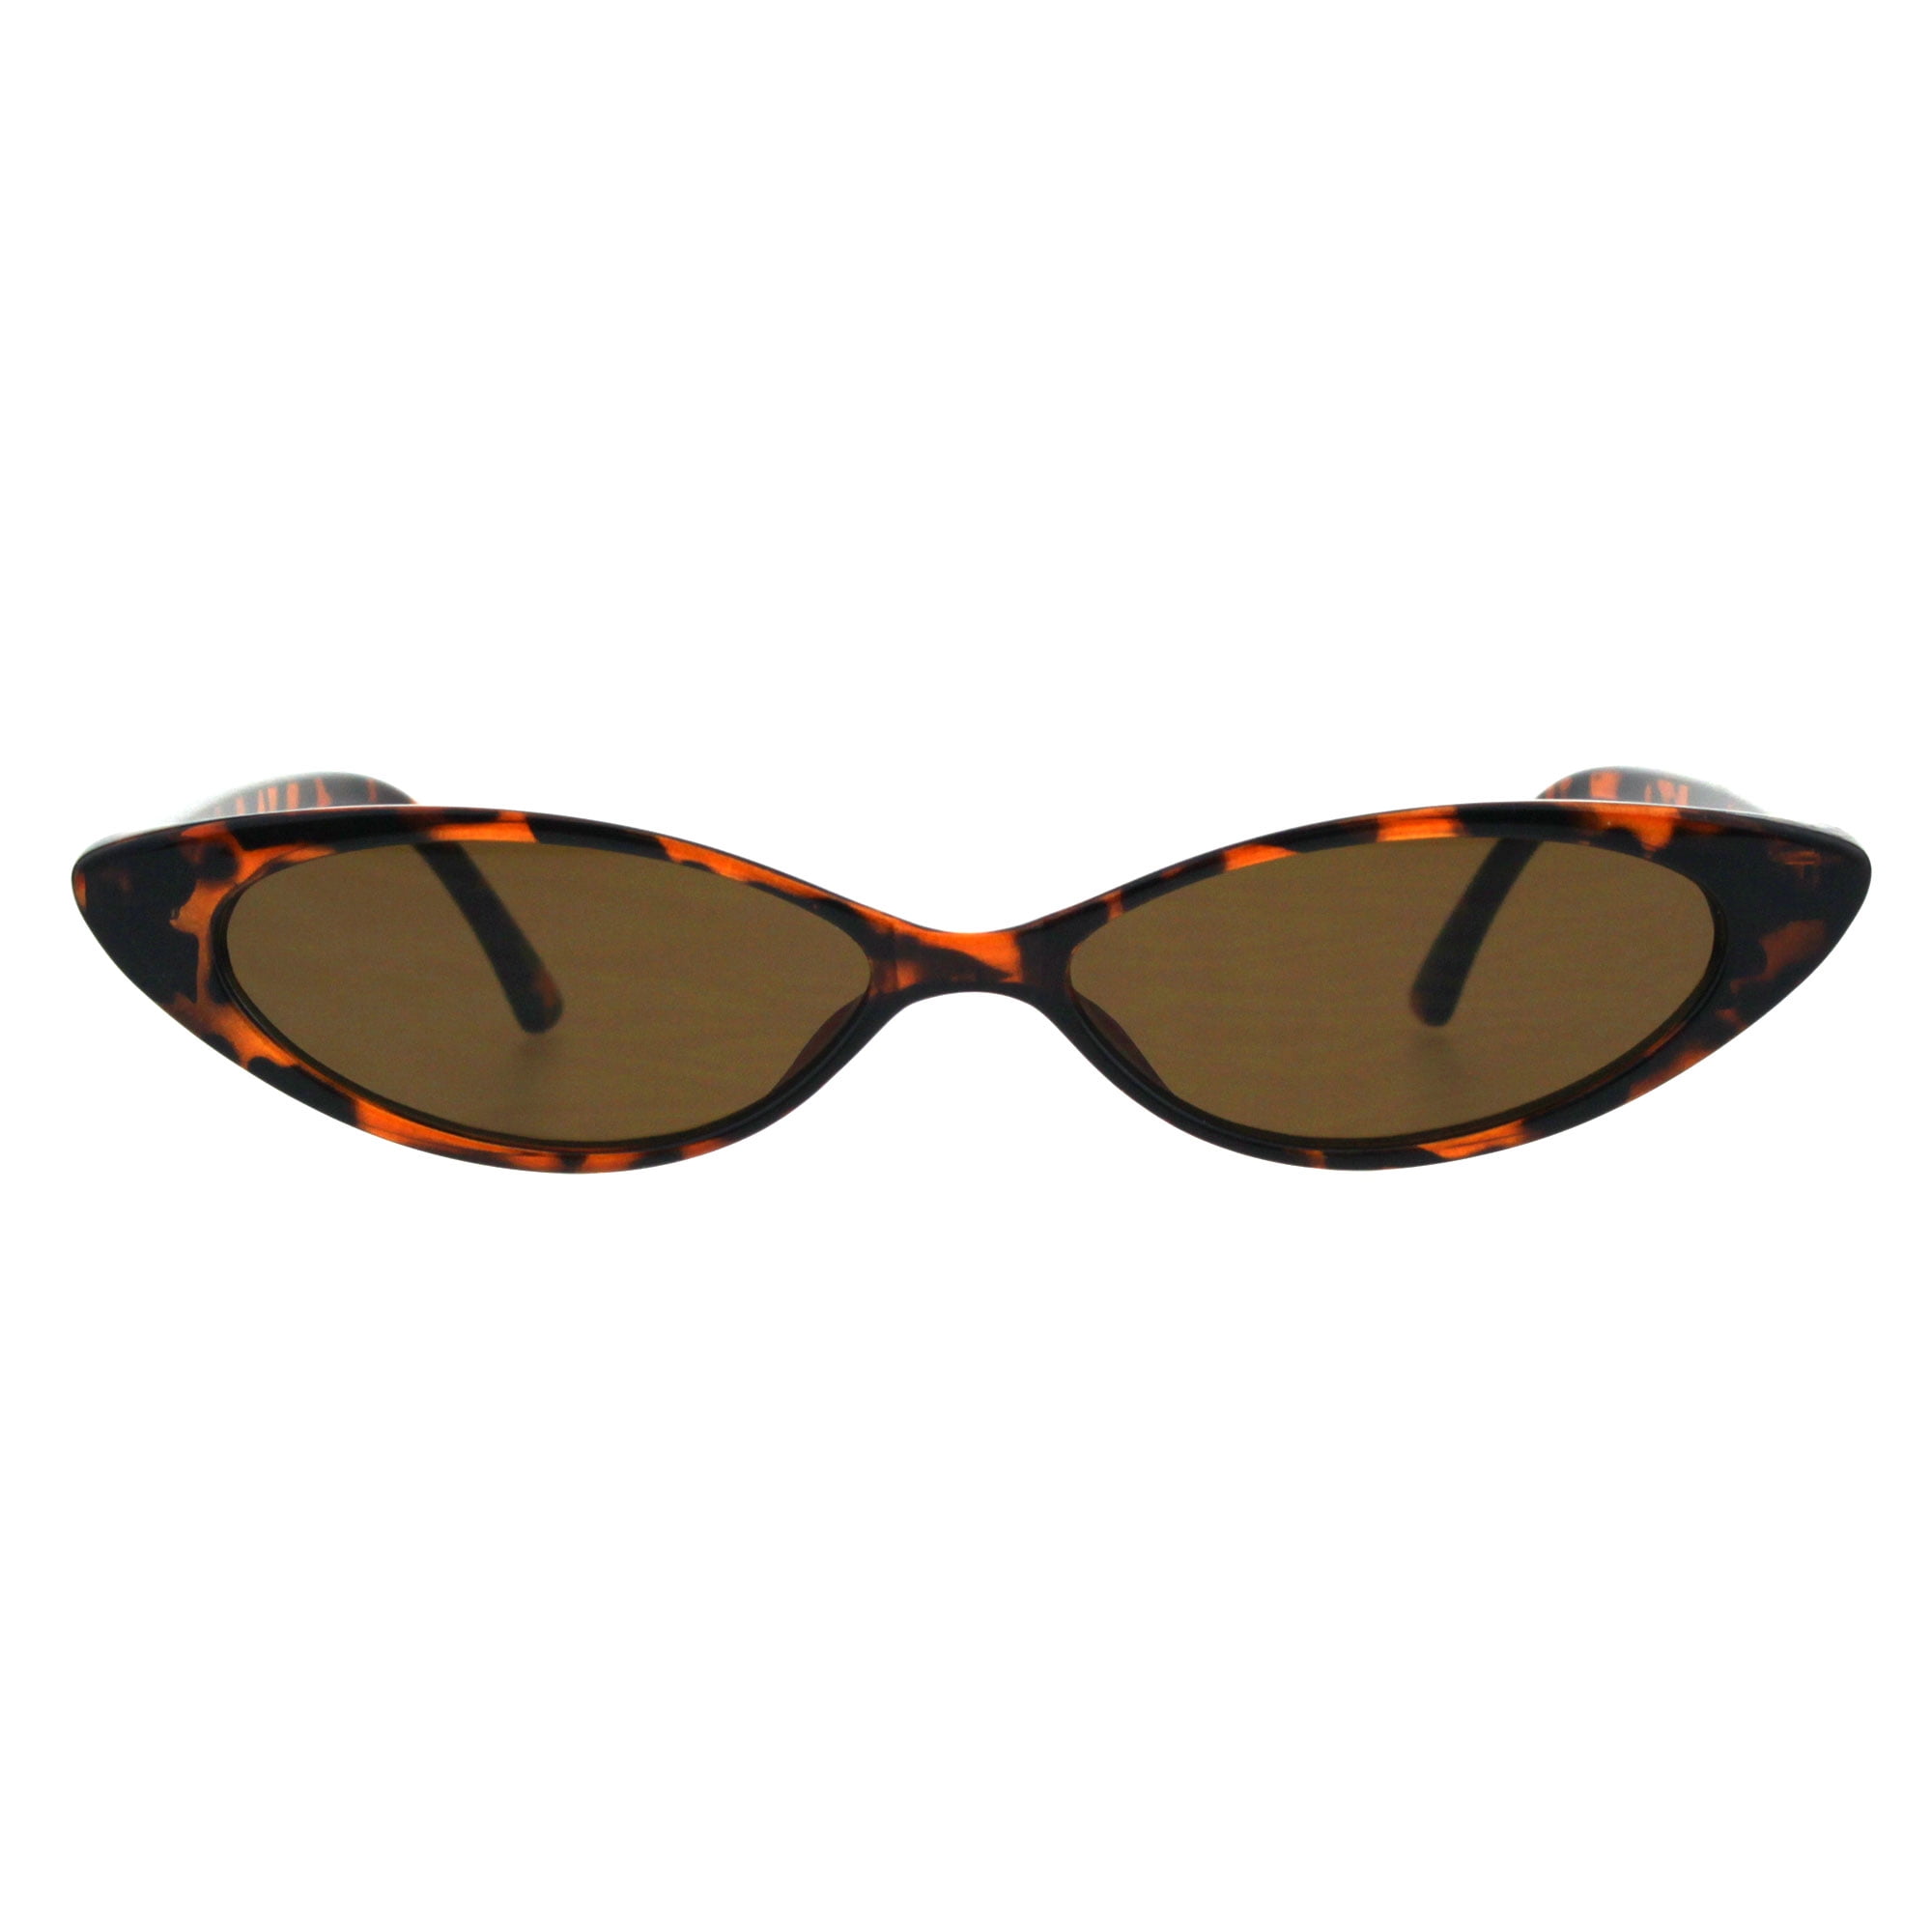 Sa106 Womens Narrow Thin Cat Eye Plastic Gothic Retro Sunglasses Tortoise Brown